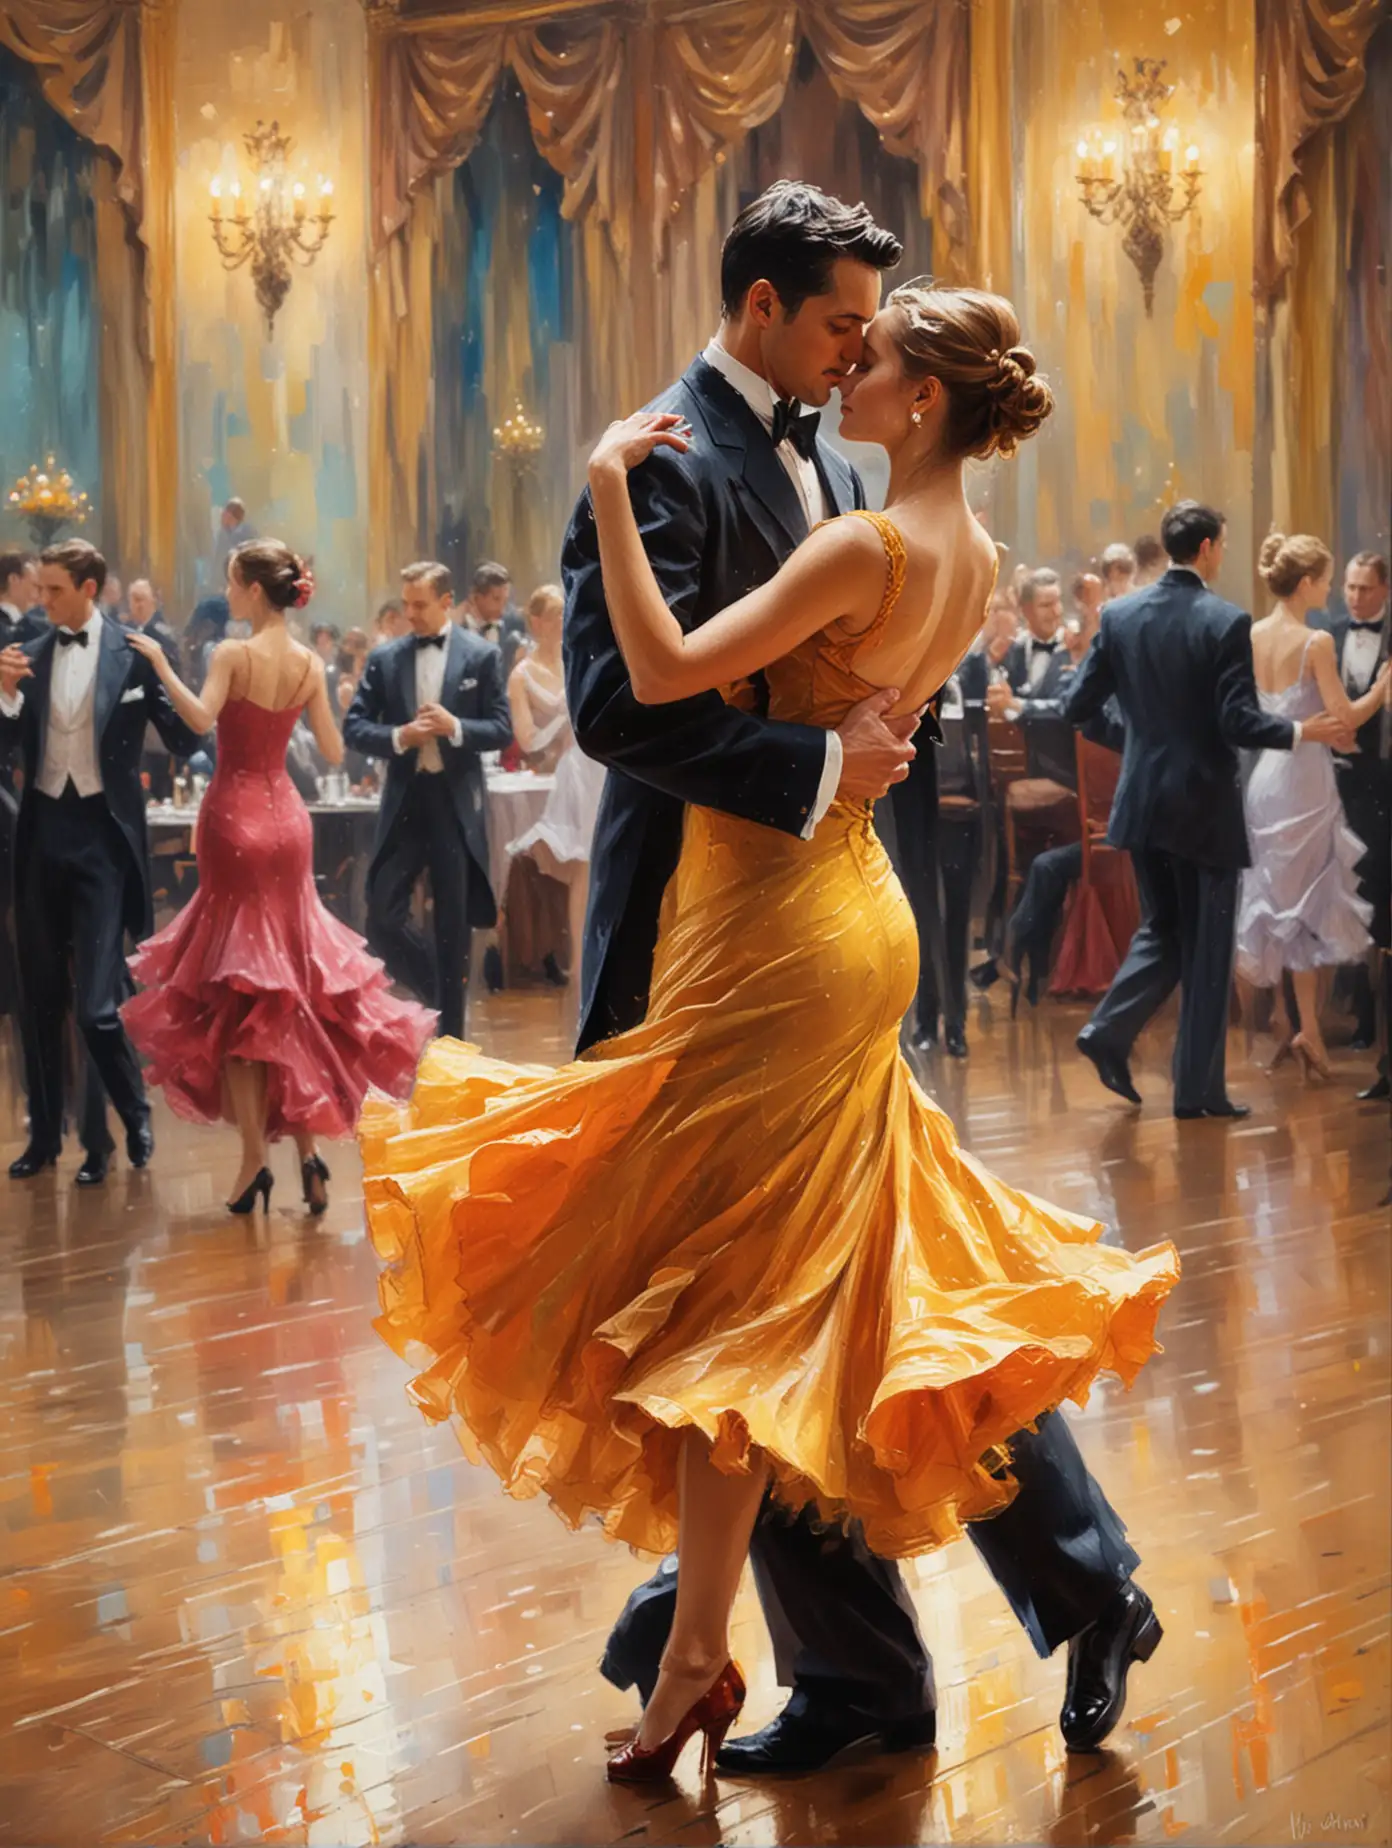 Impressionist Painting of a Romantic Ballroom Dance